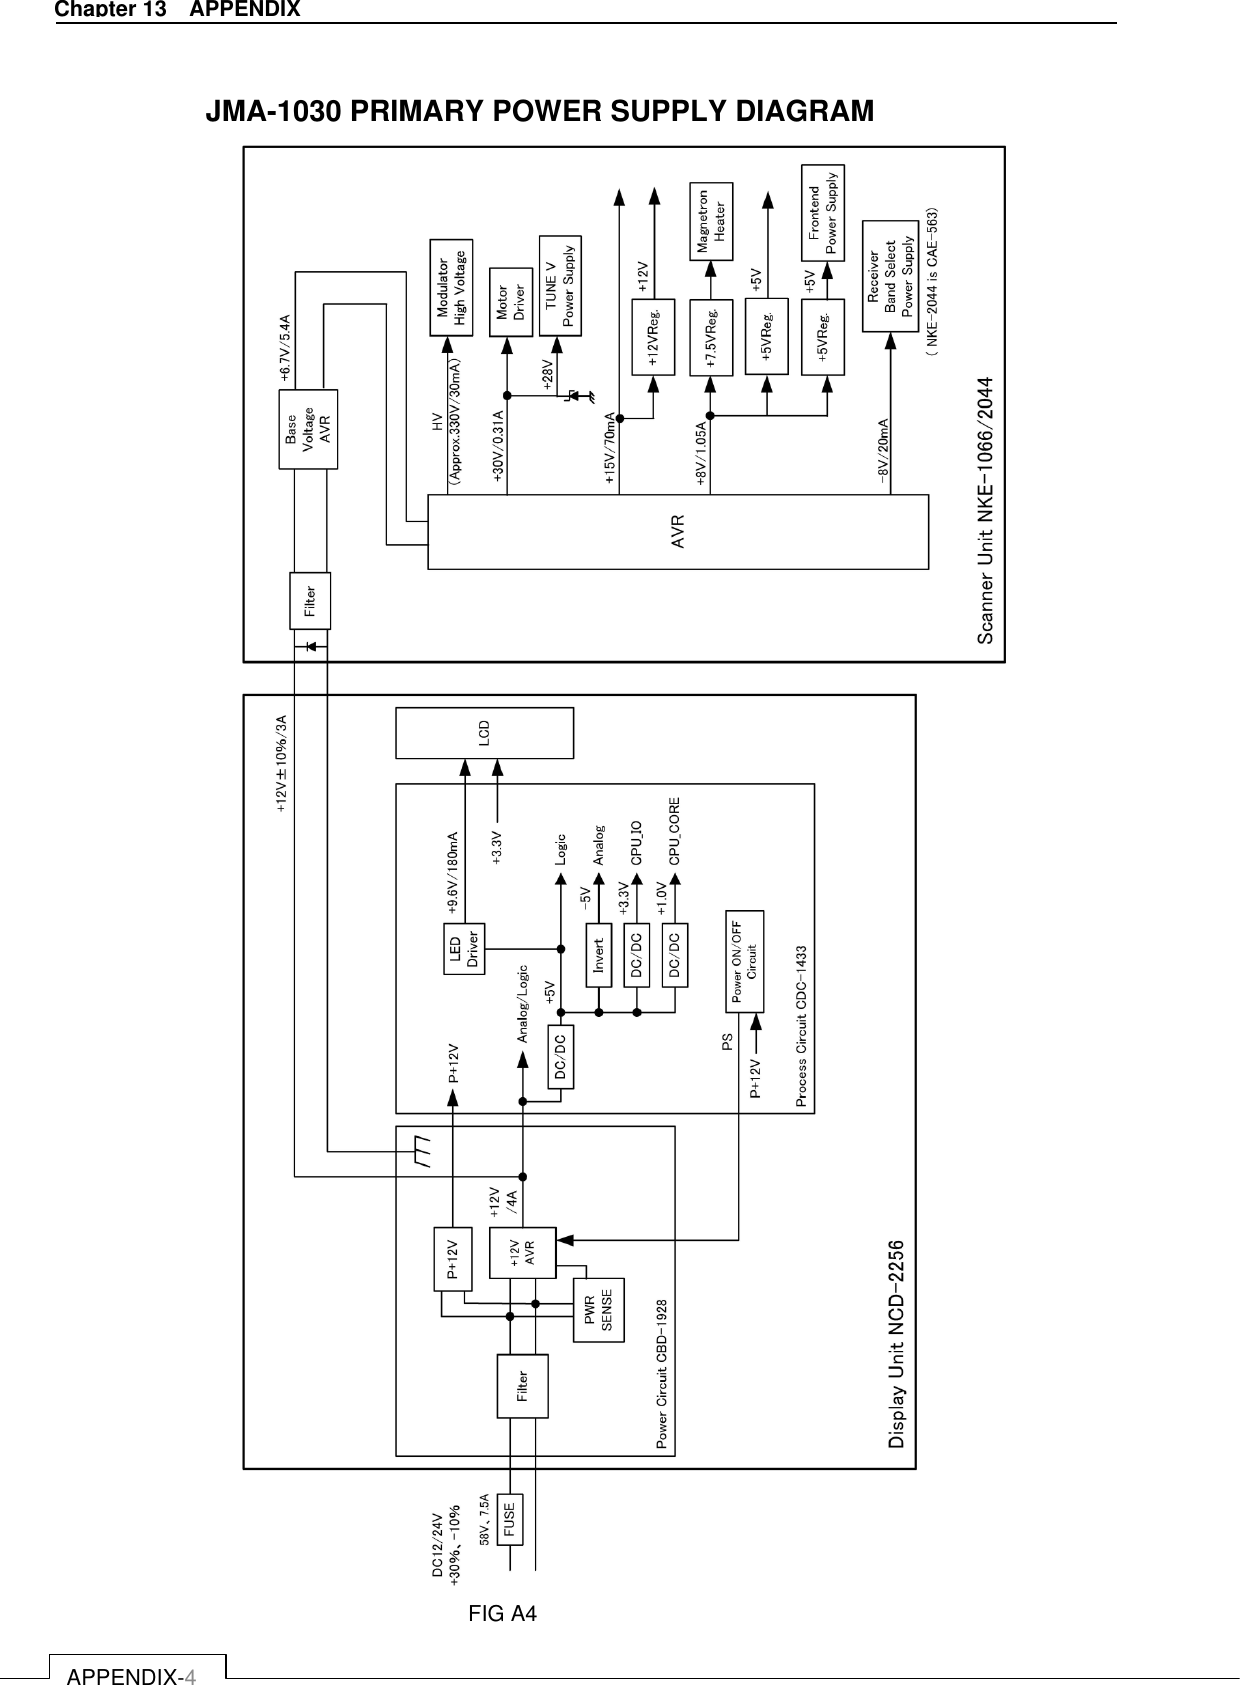   APPENDIX-4 Chapter 13    APPENDIX  JMA-1030 PRIMARY POWER SUPPLY DIAGRAM                                                FIG A4 